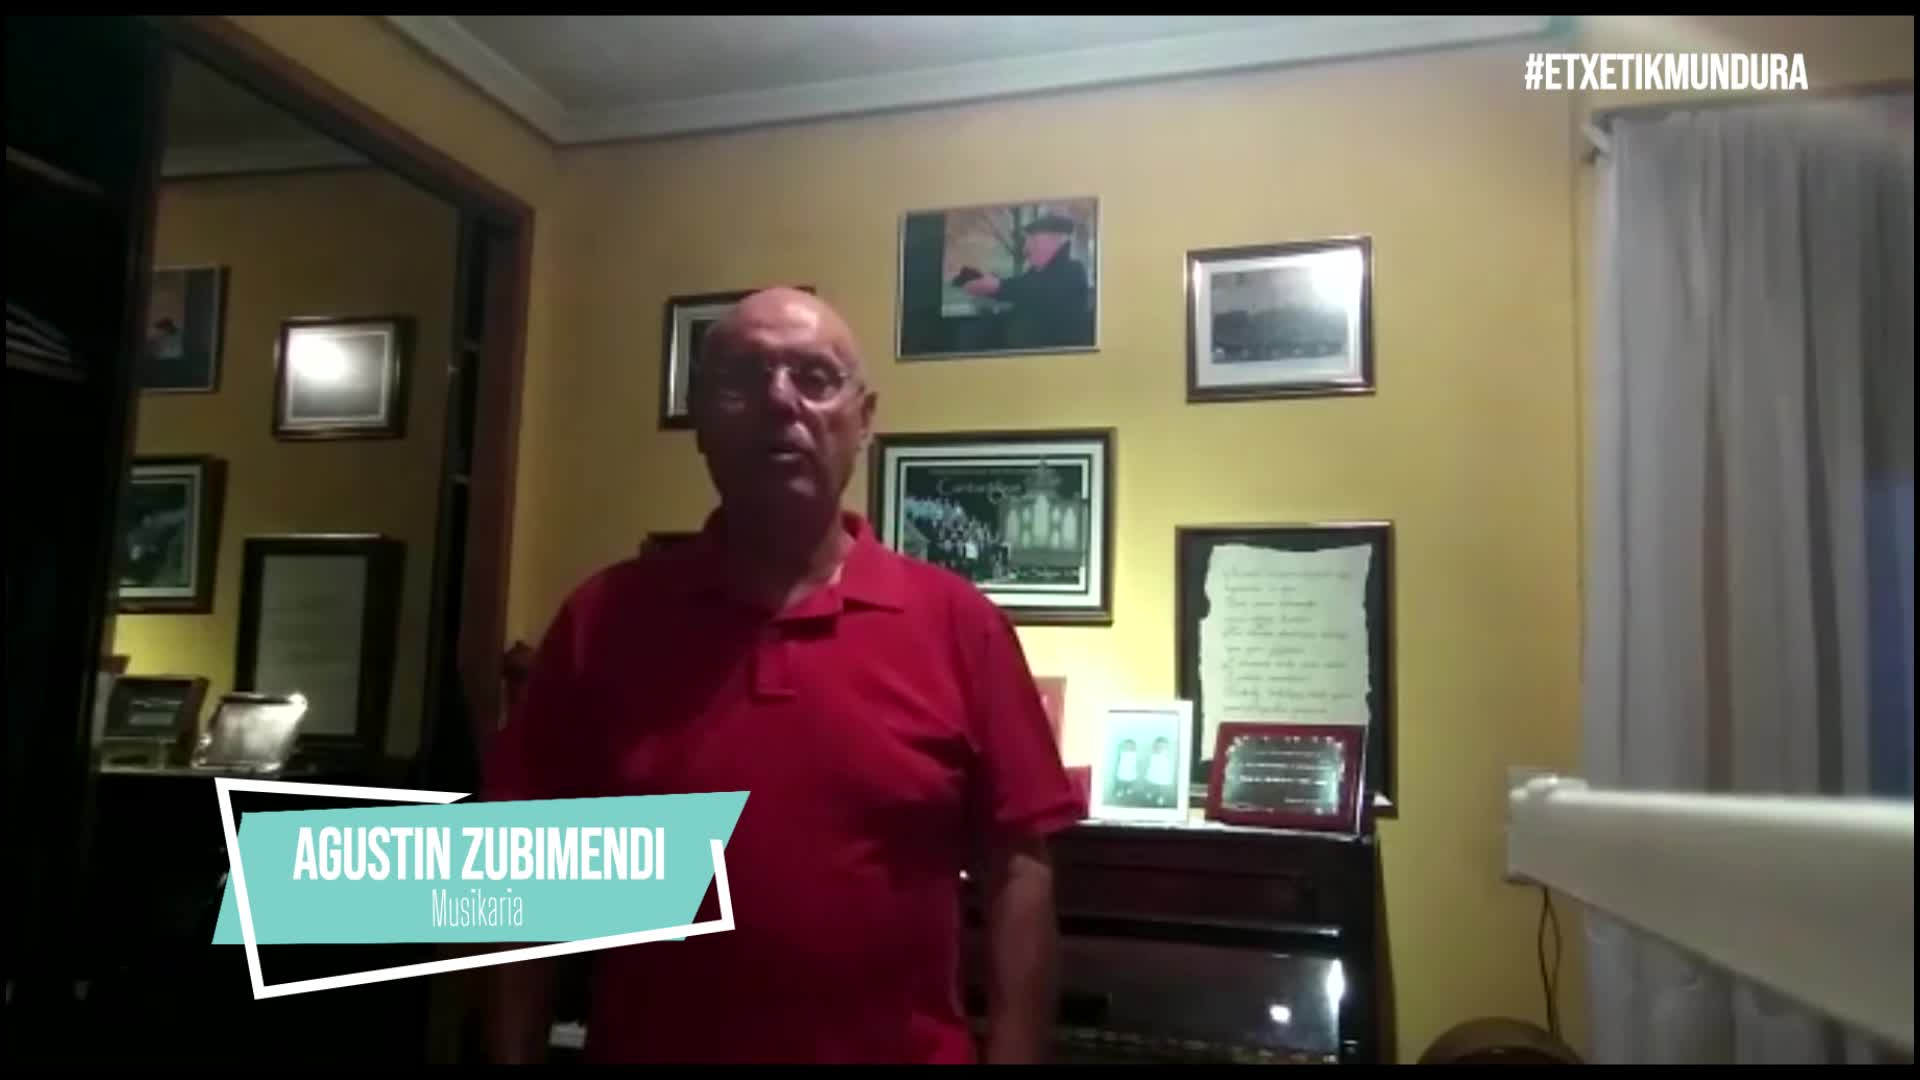 Agustin Zubimendi musikaria, etxetik mundura